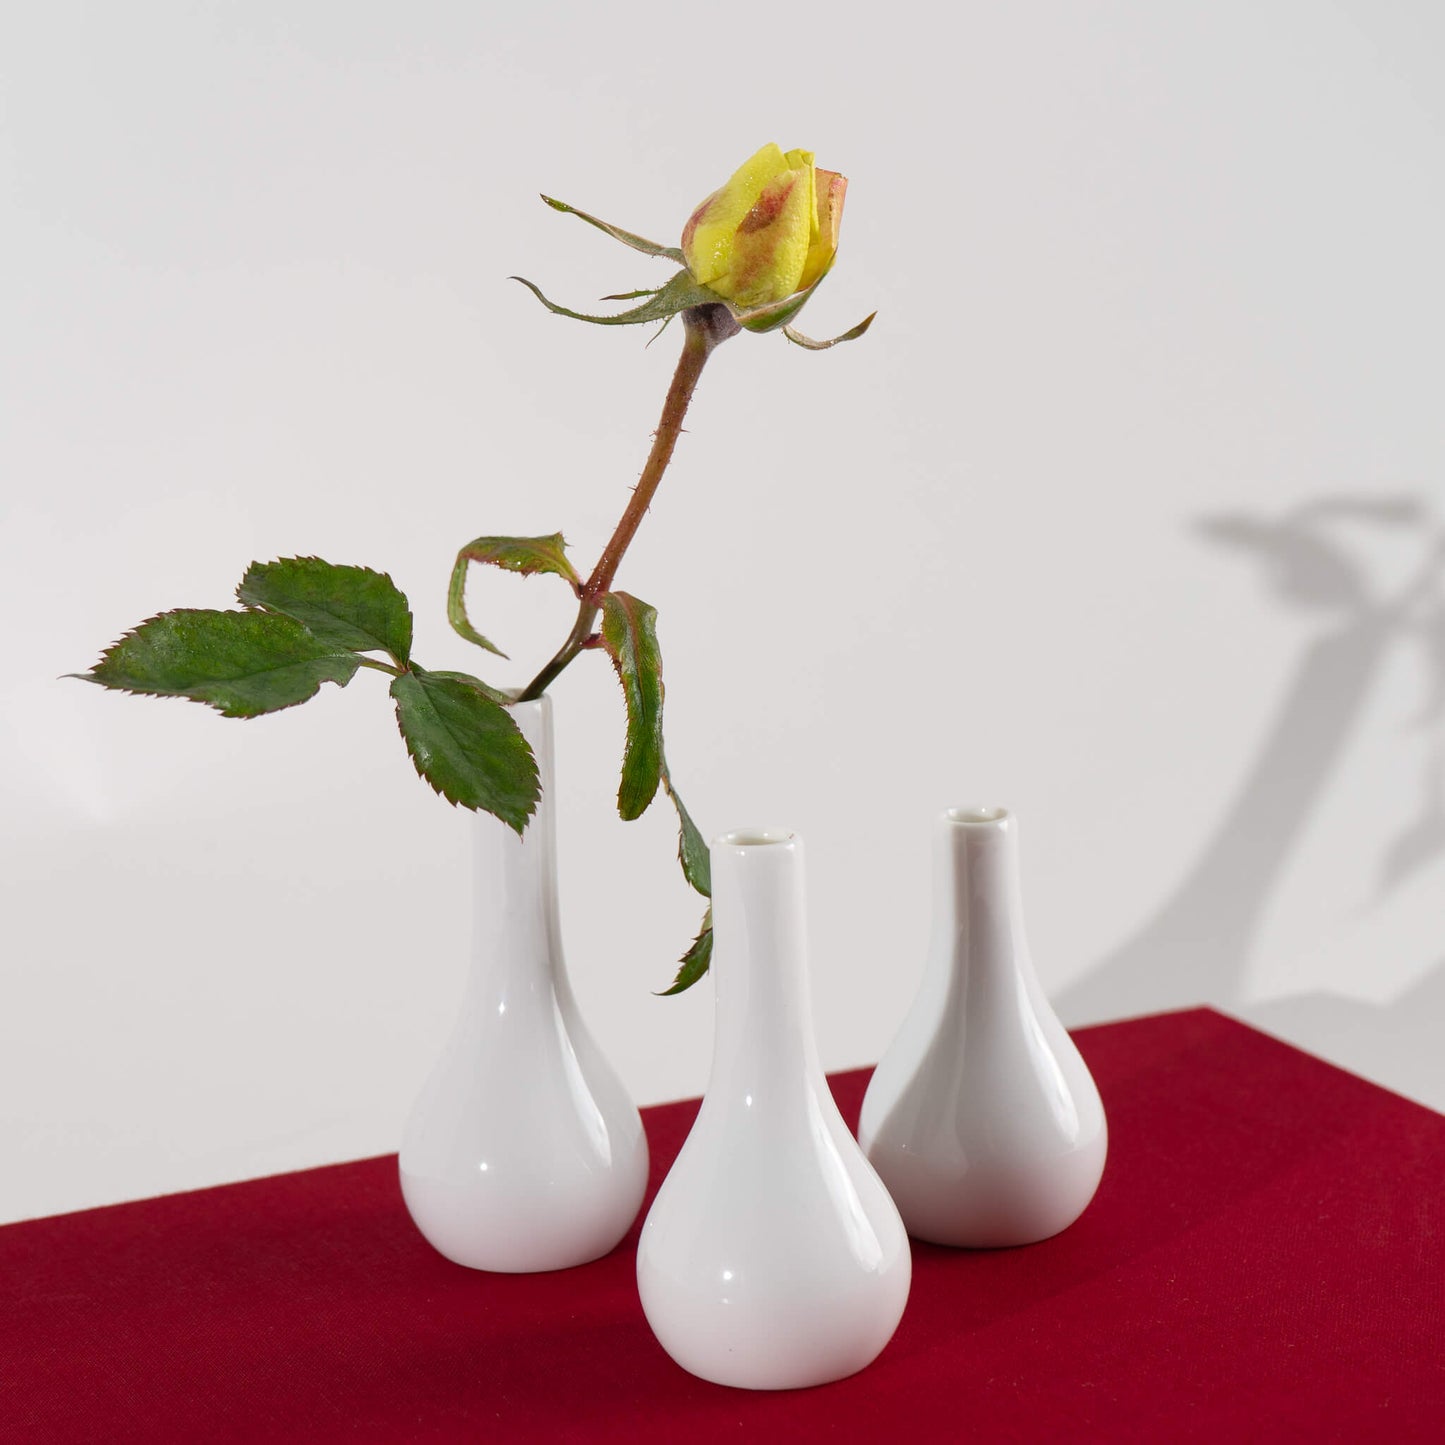 Vintage White Porcelain Fitz and Floyd Bud Vases - Set of 3